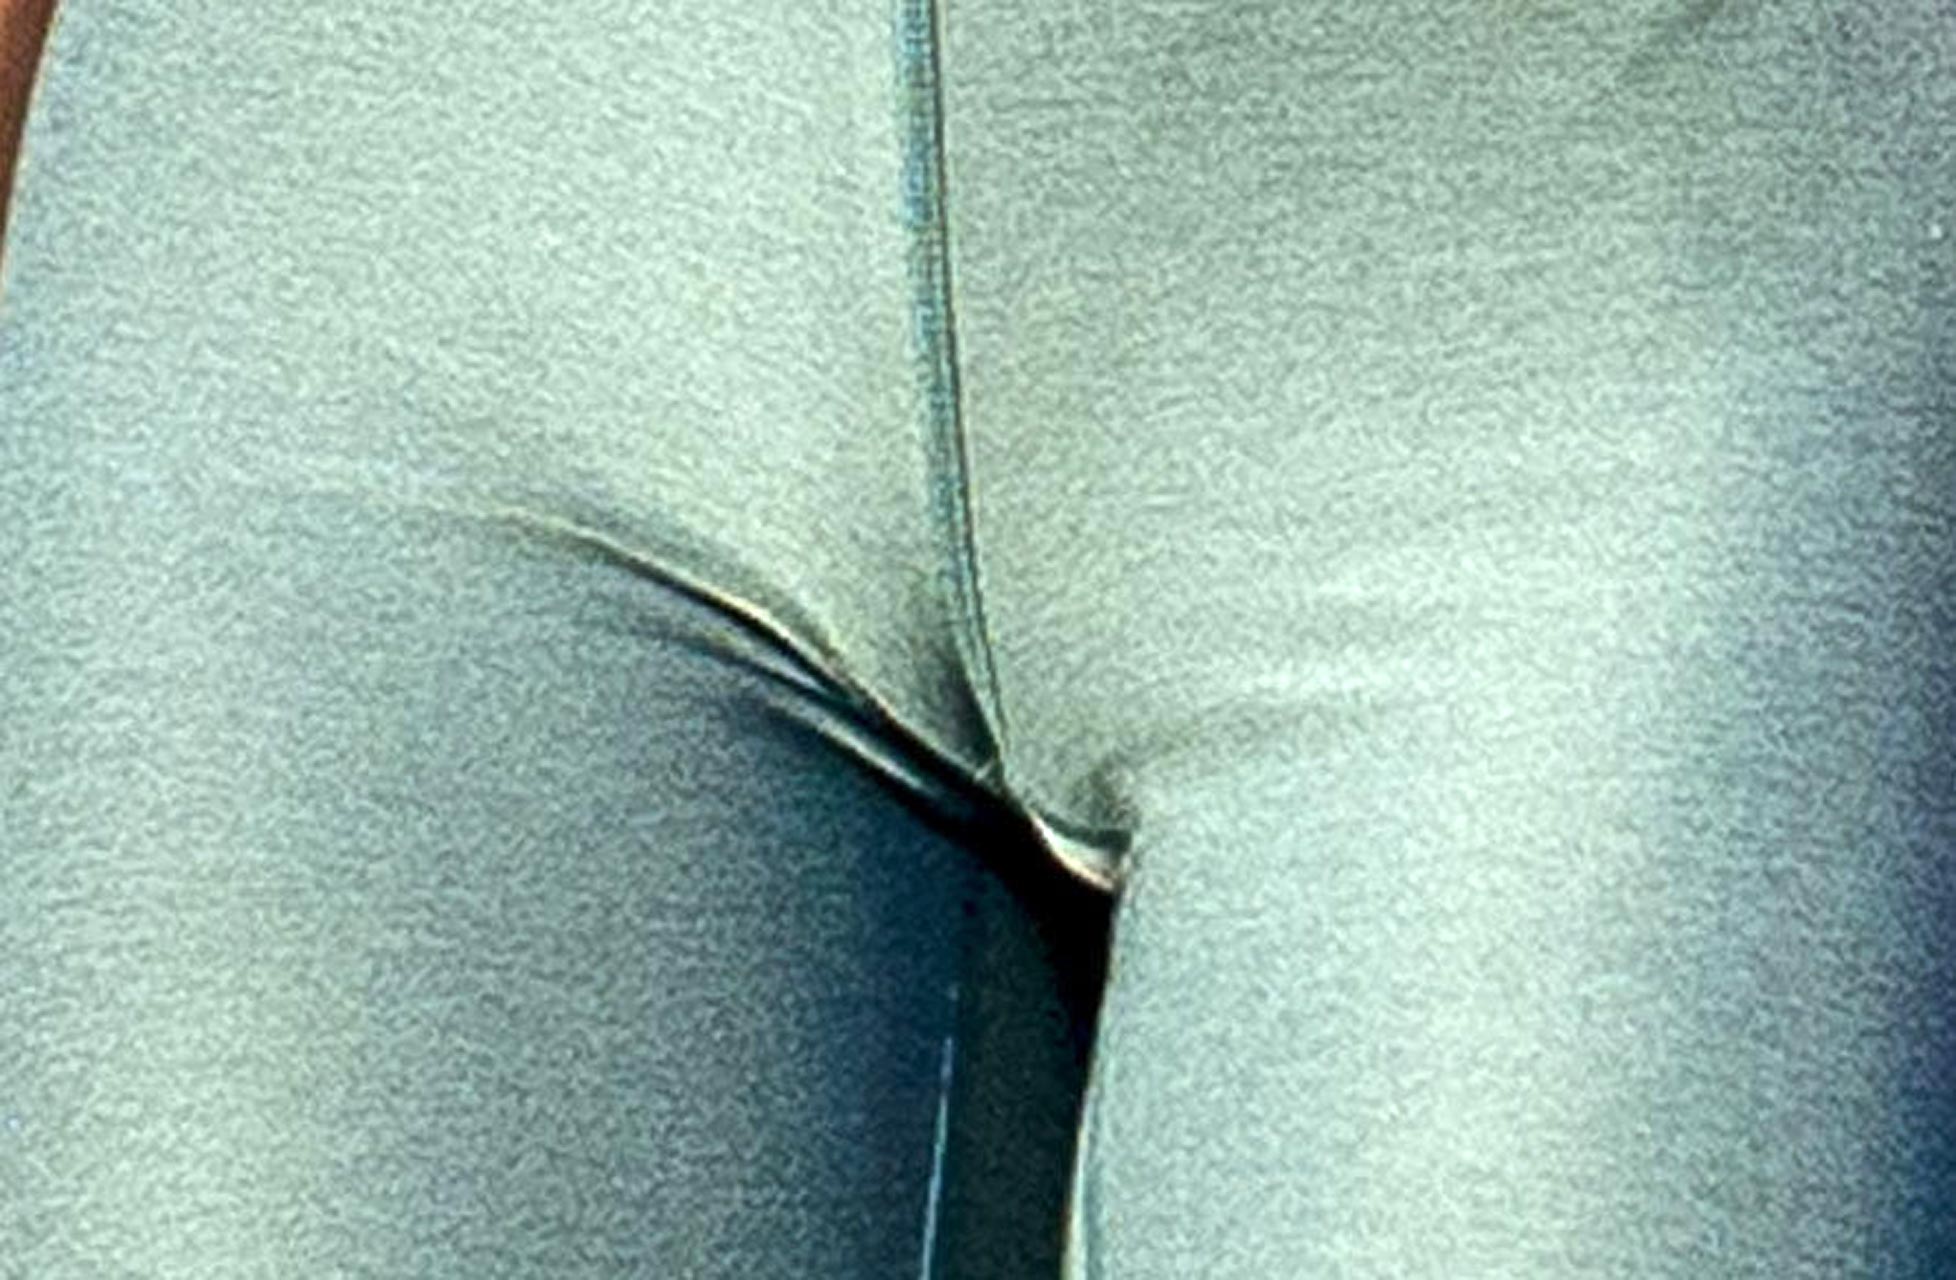 Leggings Cameltoe Porn - Megan Fox Pussy Through Grey Leggings â€” Cameltoe In Public ...